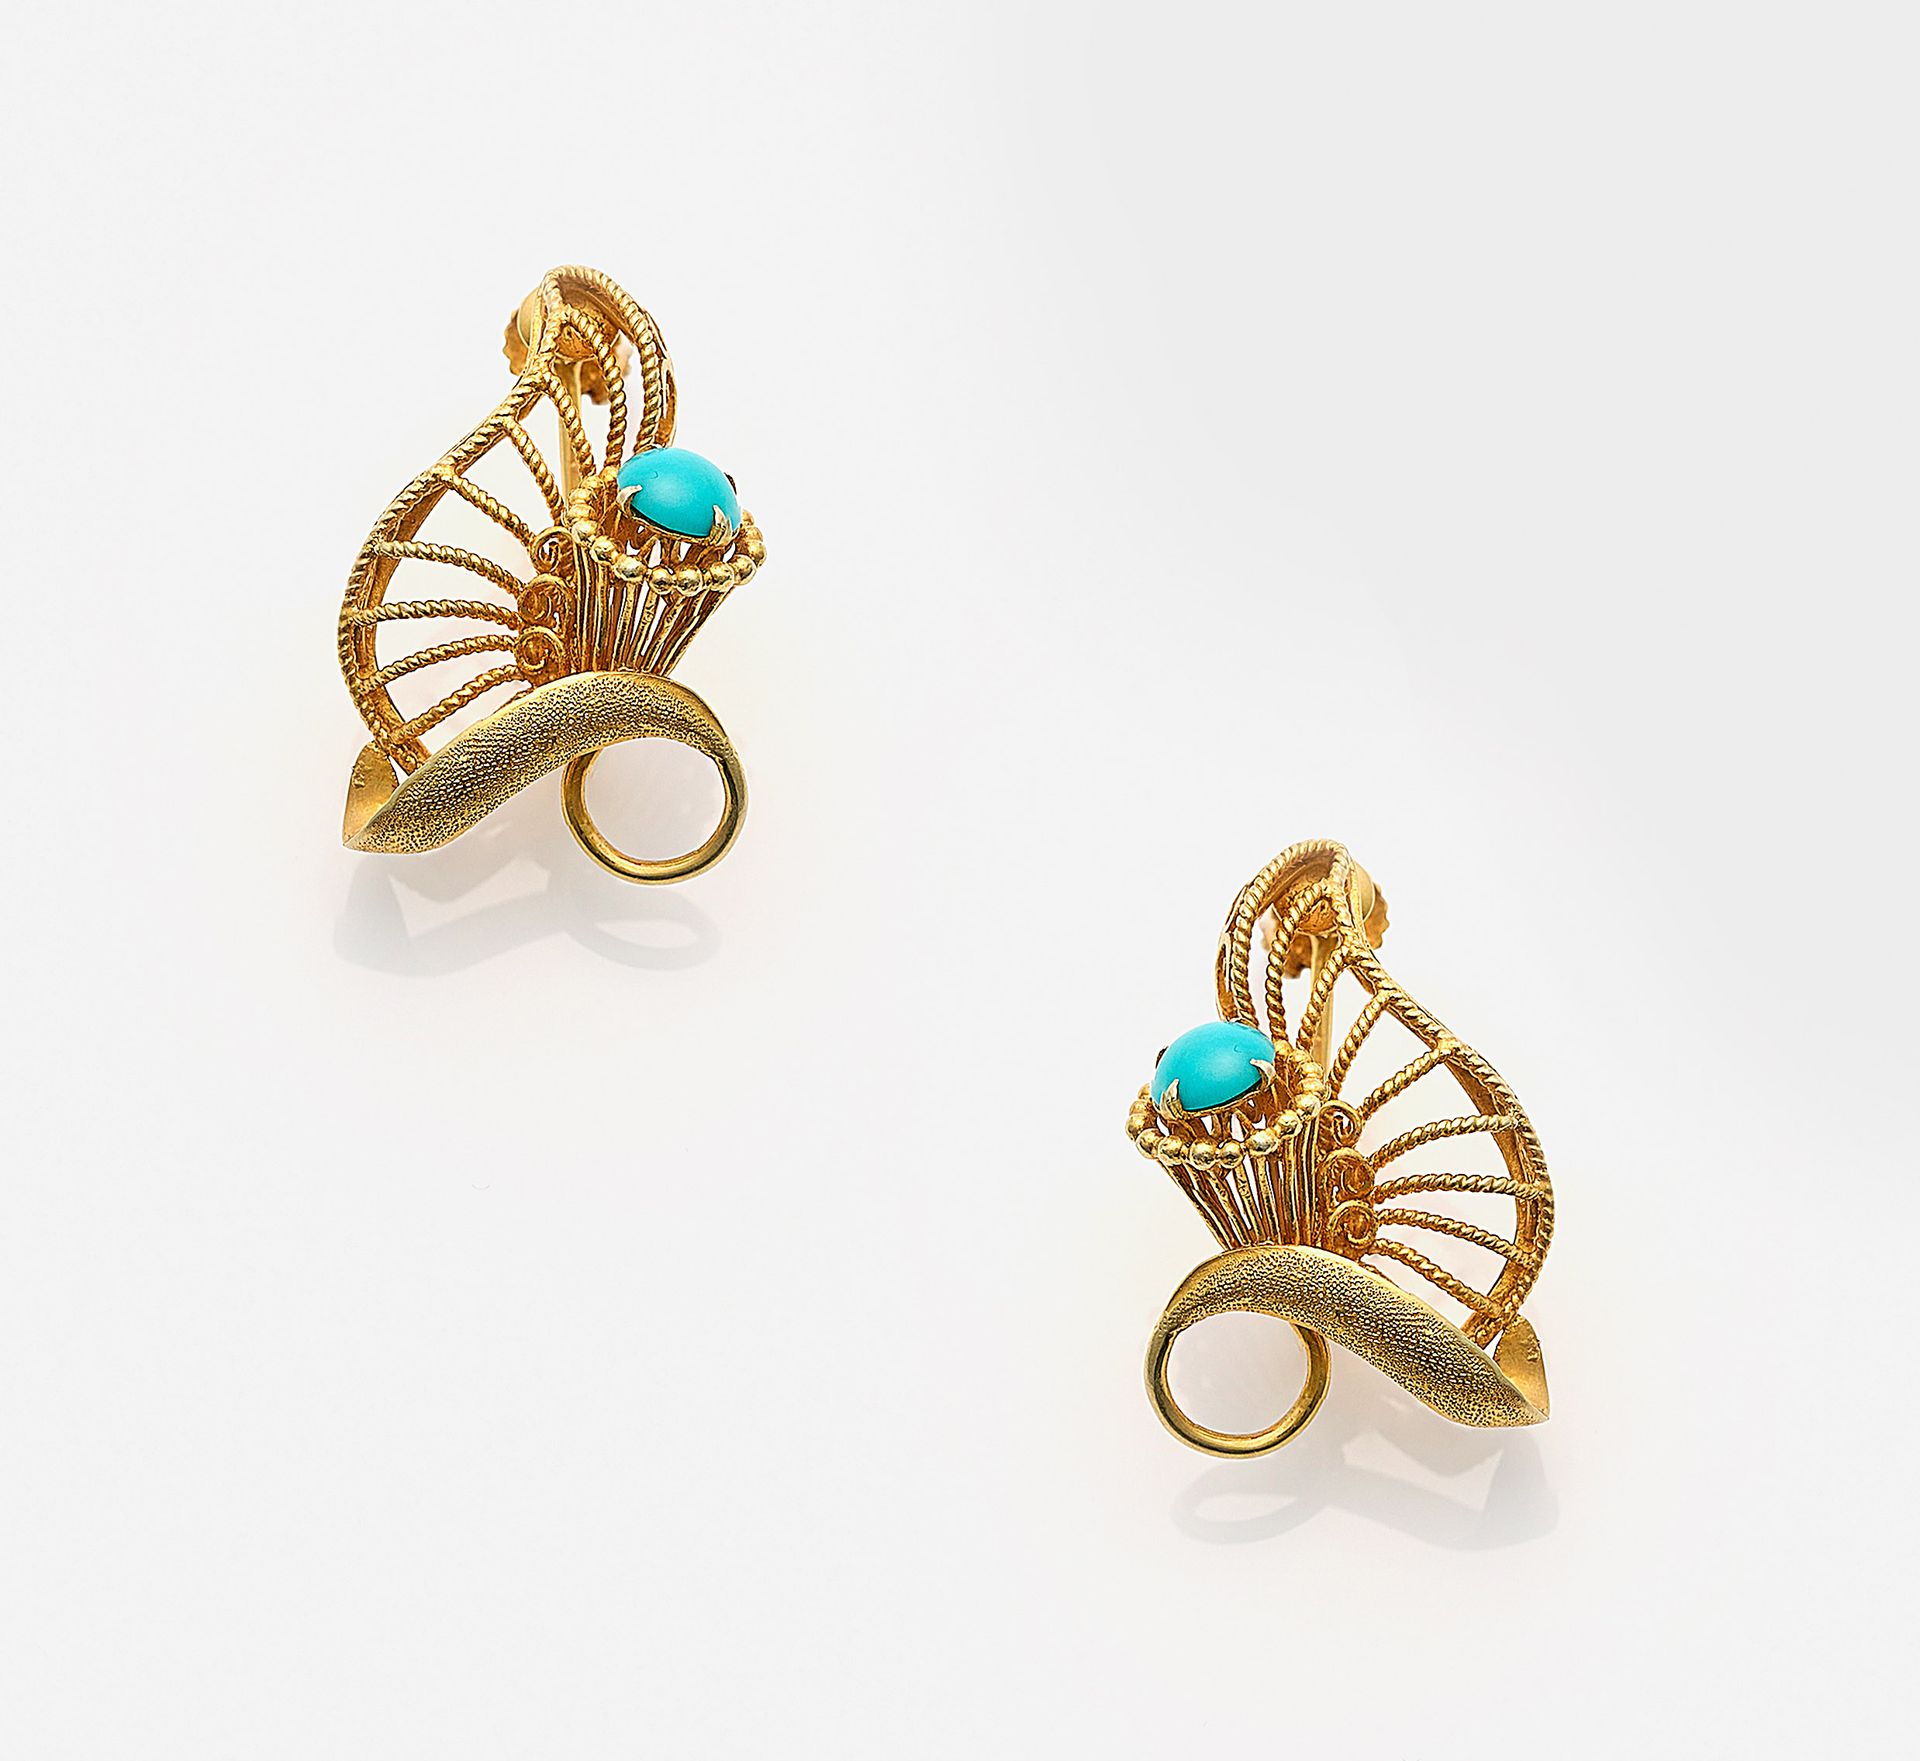 Null 一对 20 世纪 30 年代的绿松石耳环，玫瑰金，14 ct；精湛的金匠手艺。总重约 7.43 克。 
一对镶嵌绿松石的 14K 红金耳环。